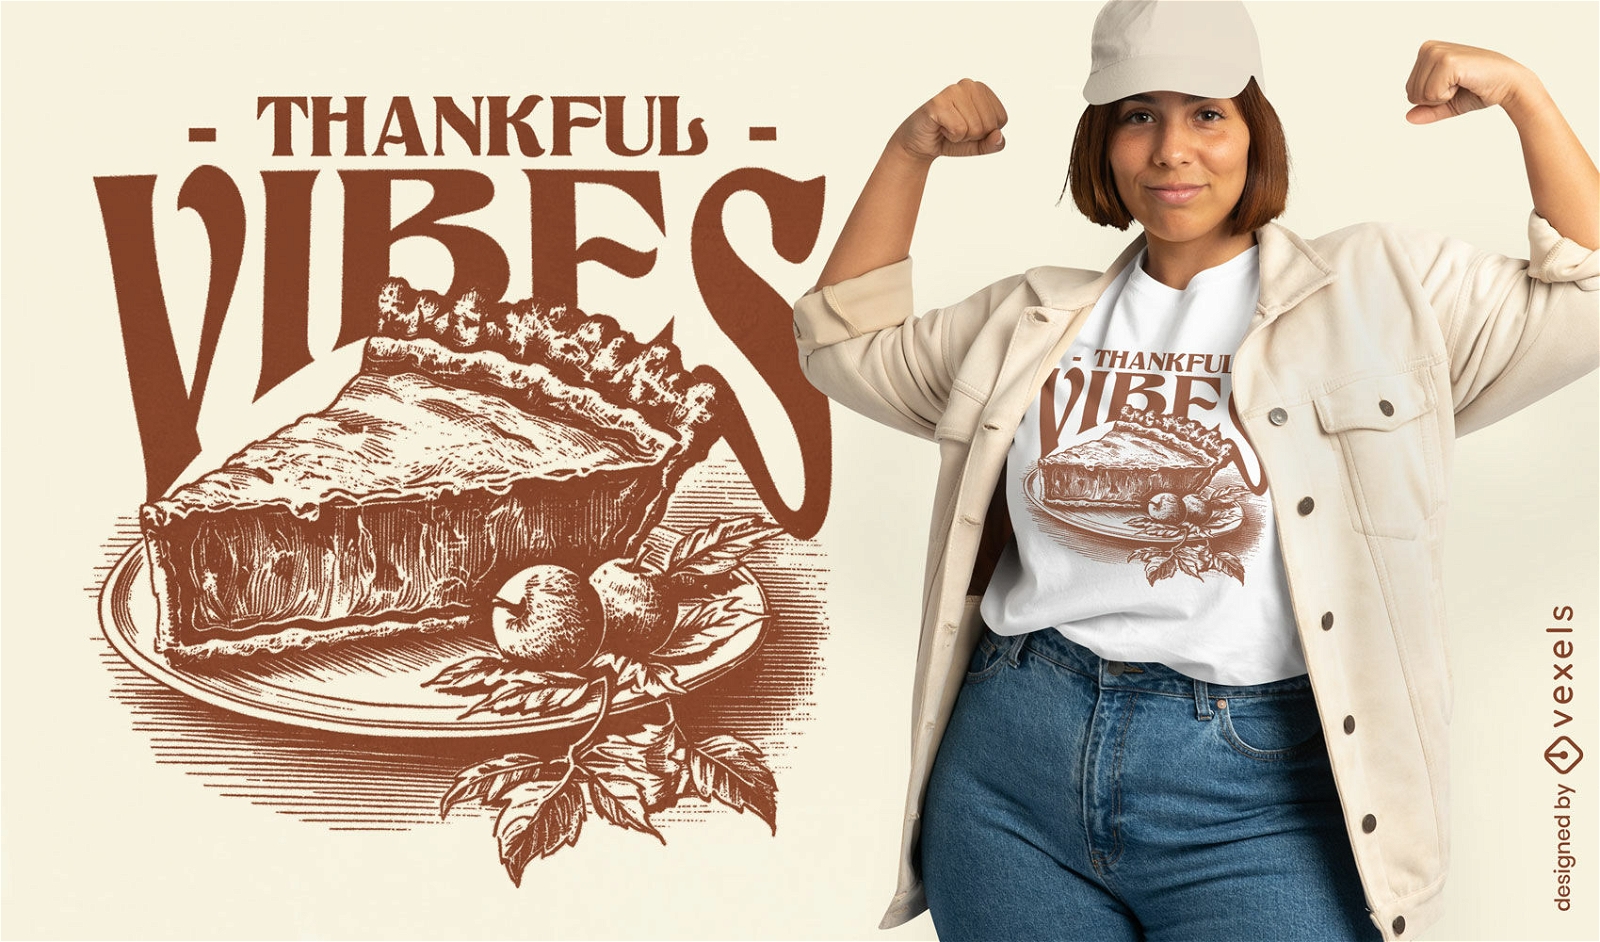 Blueberry pie thanksgiving food t-shirt psd